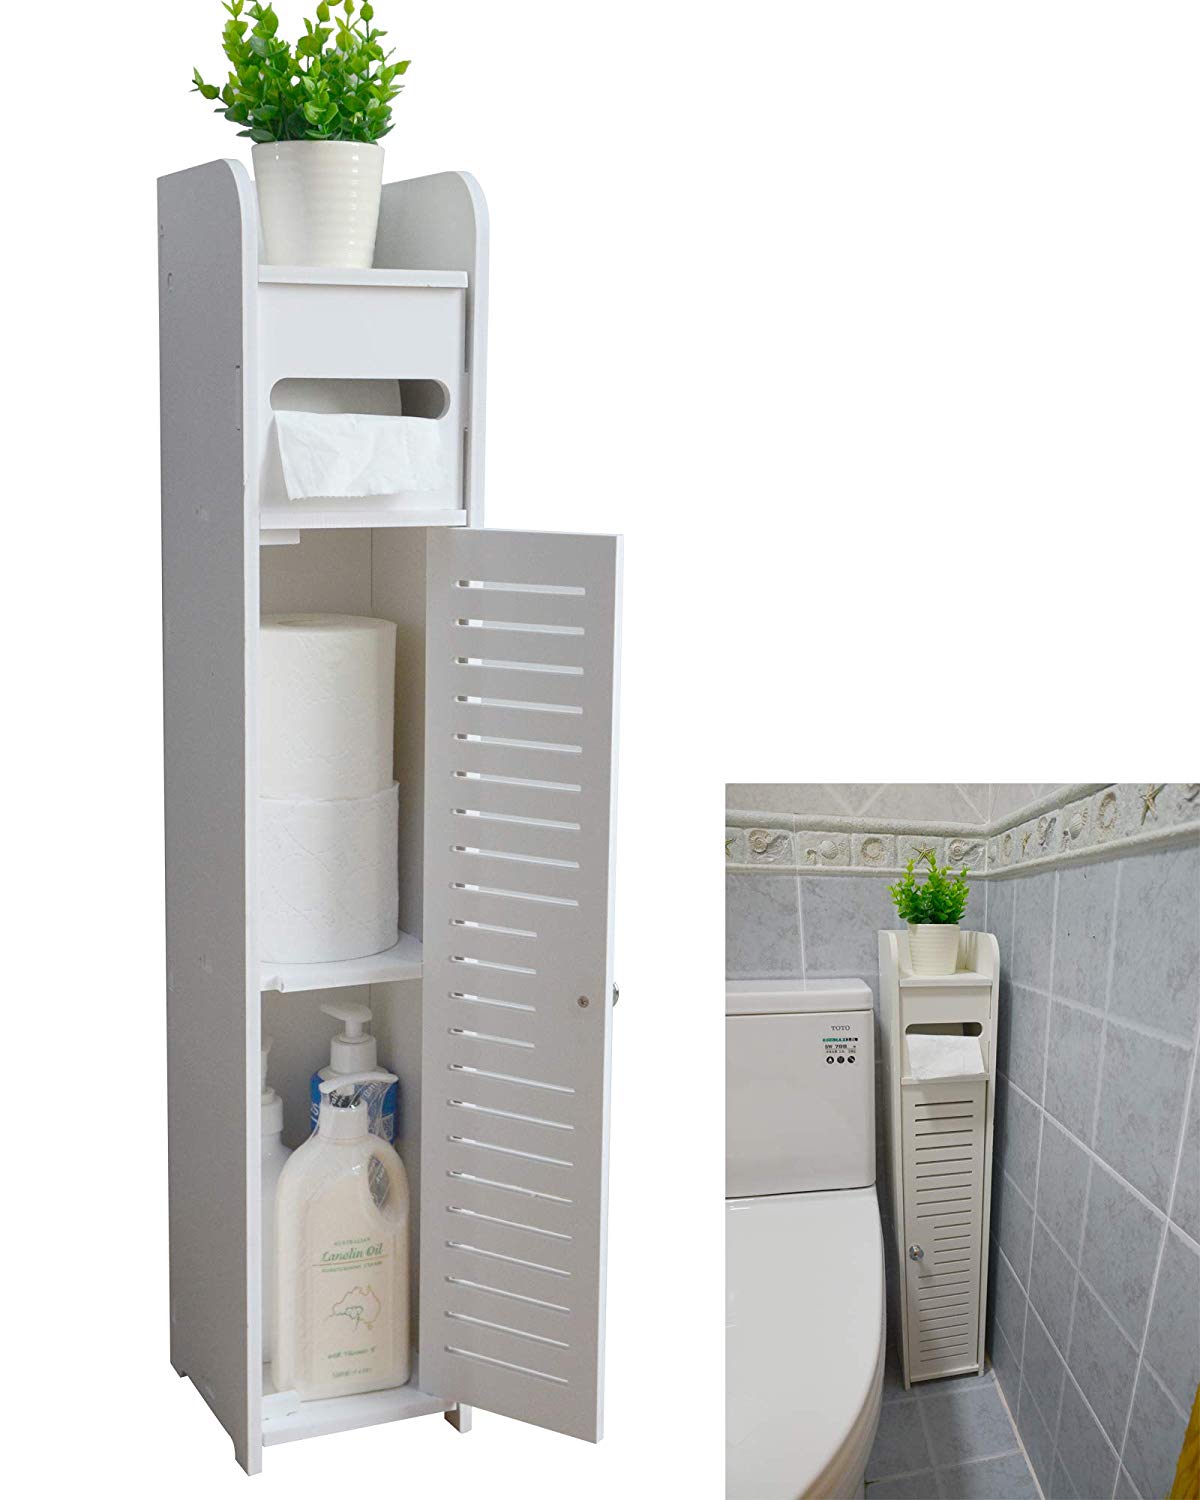 Bathroom Storage Cabinet,Small Bathroom Storage Cabinet Great for